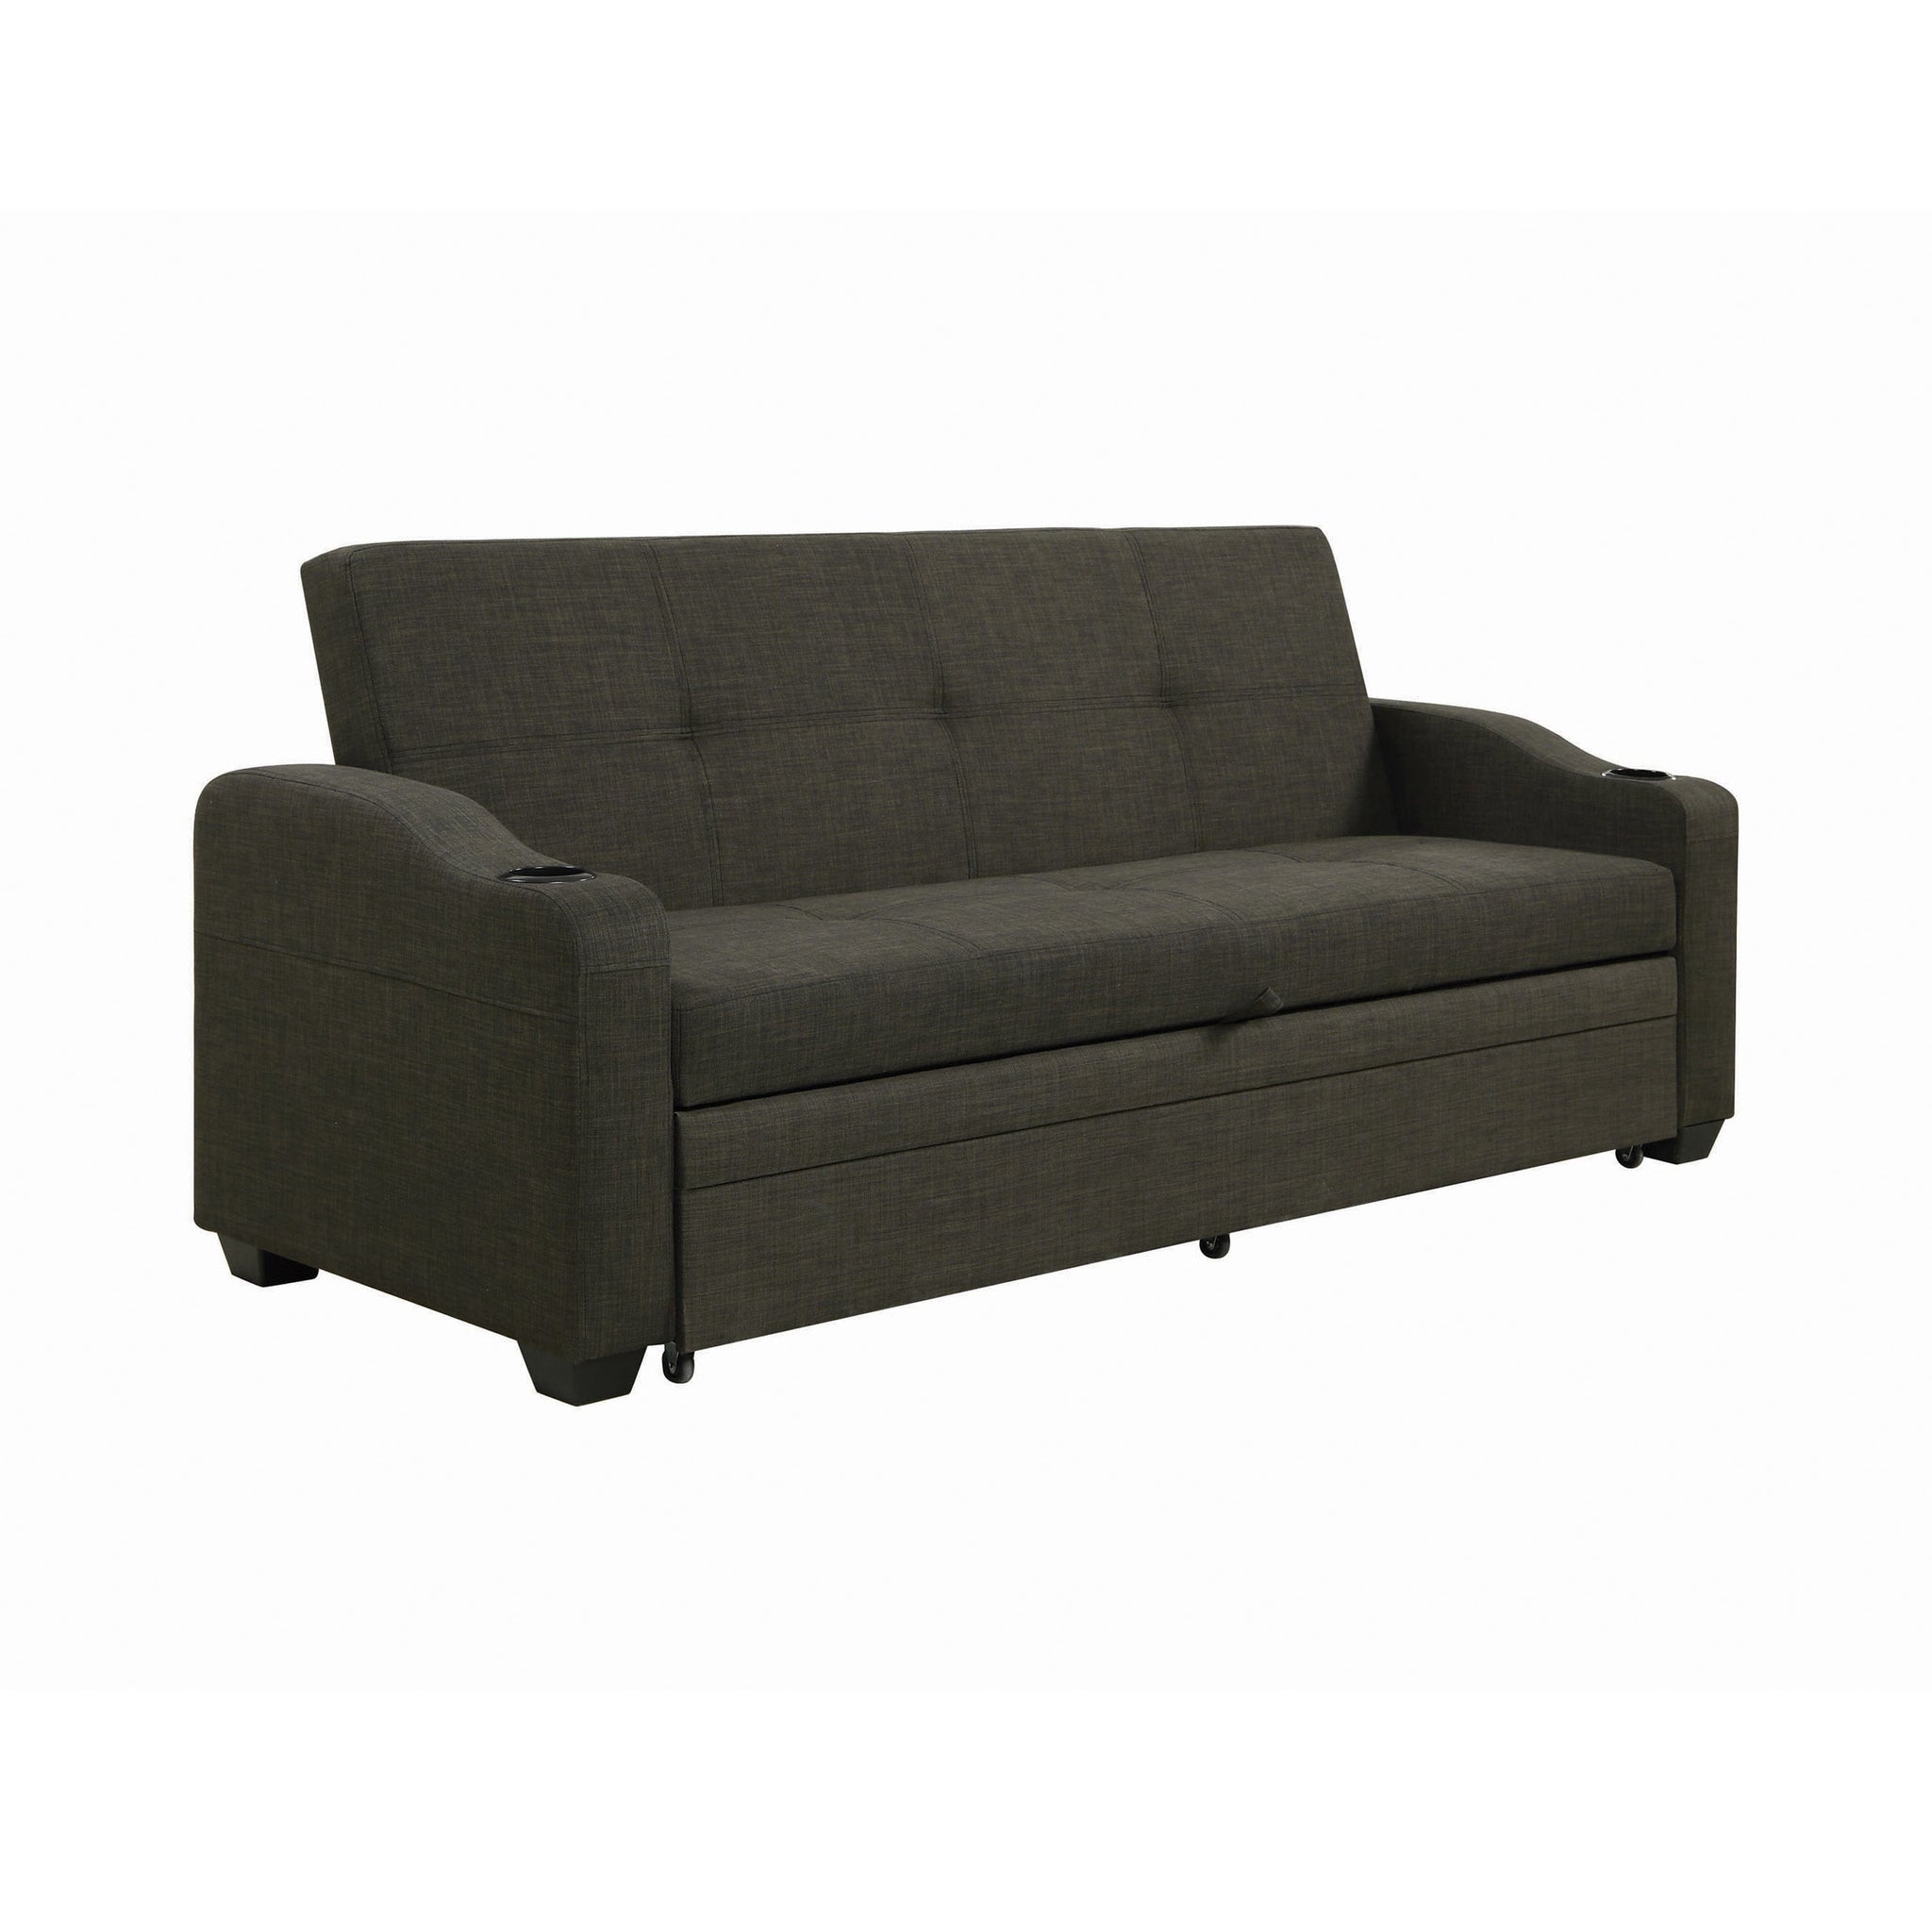 Miller Upholstered Sleeper Sofa Bed Charcoal Grey Collection: Miller SKU: 360063